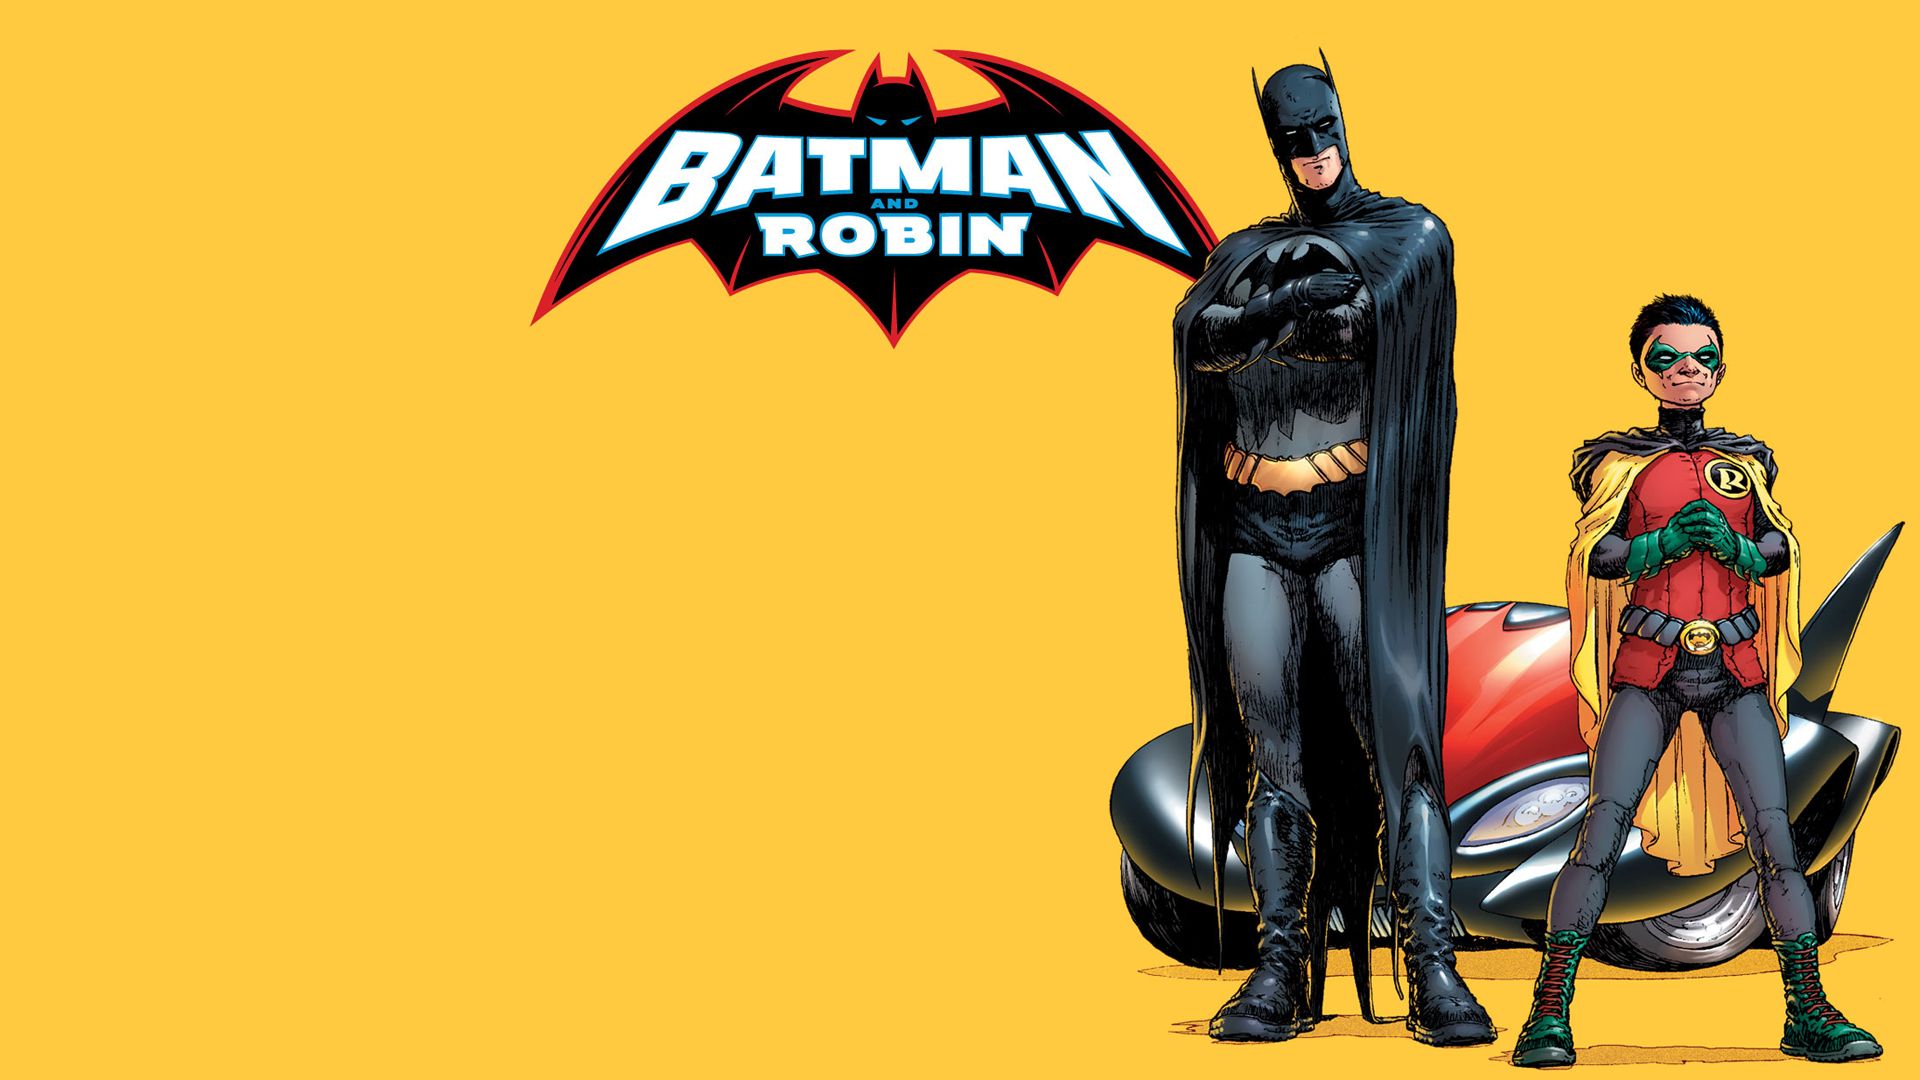 296059 Bild herunterladen comics, batman & robin, batman, robin (dc comics), the batman - Hintergrundbilder und Bildschirmschoner kostenlos